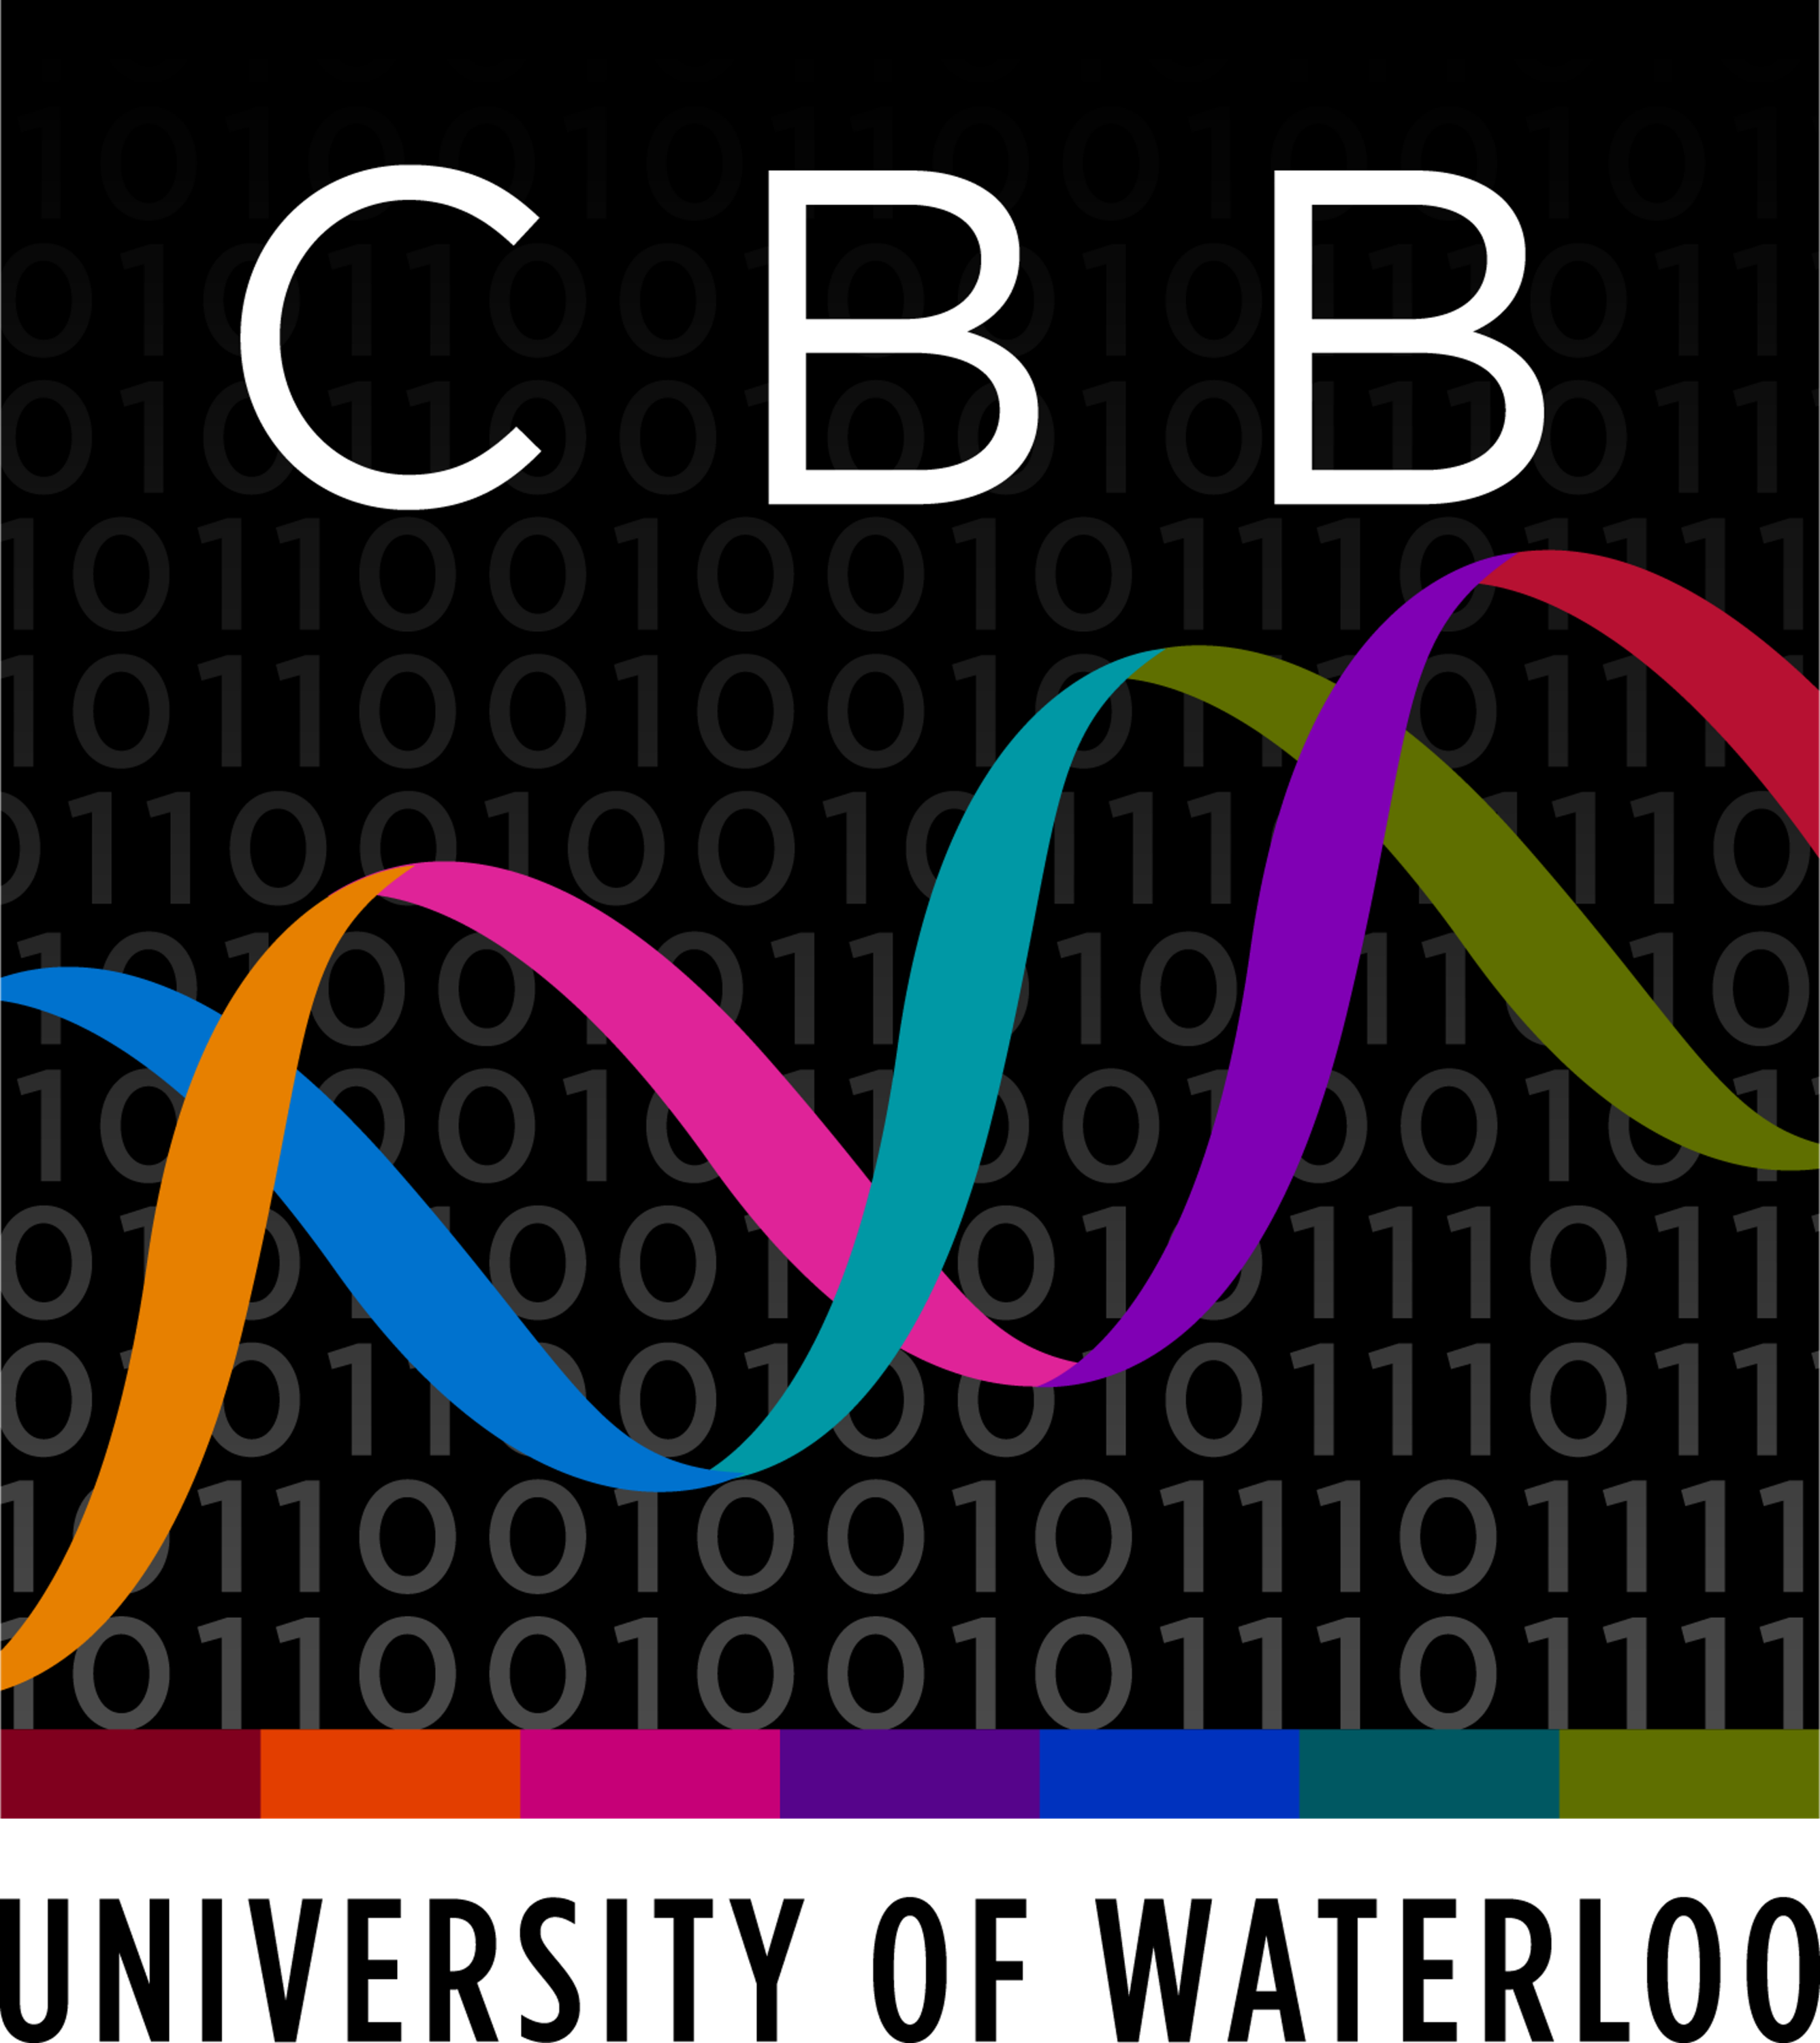 CBB logo with text 'University of Waterloo'